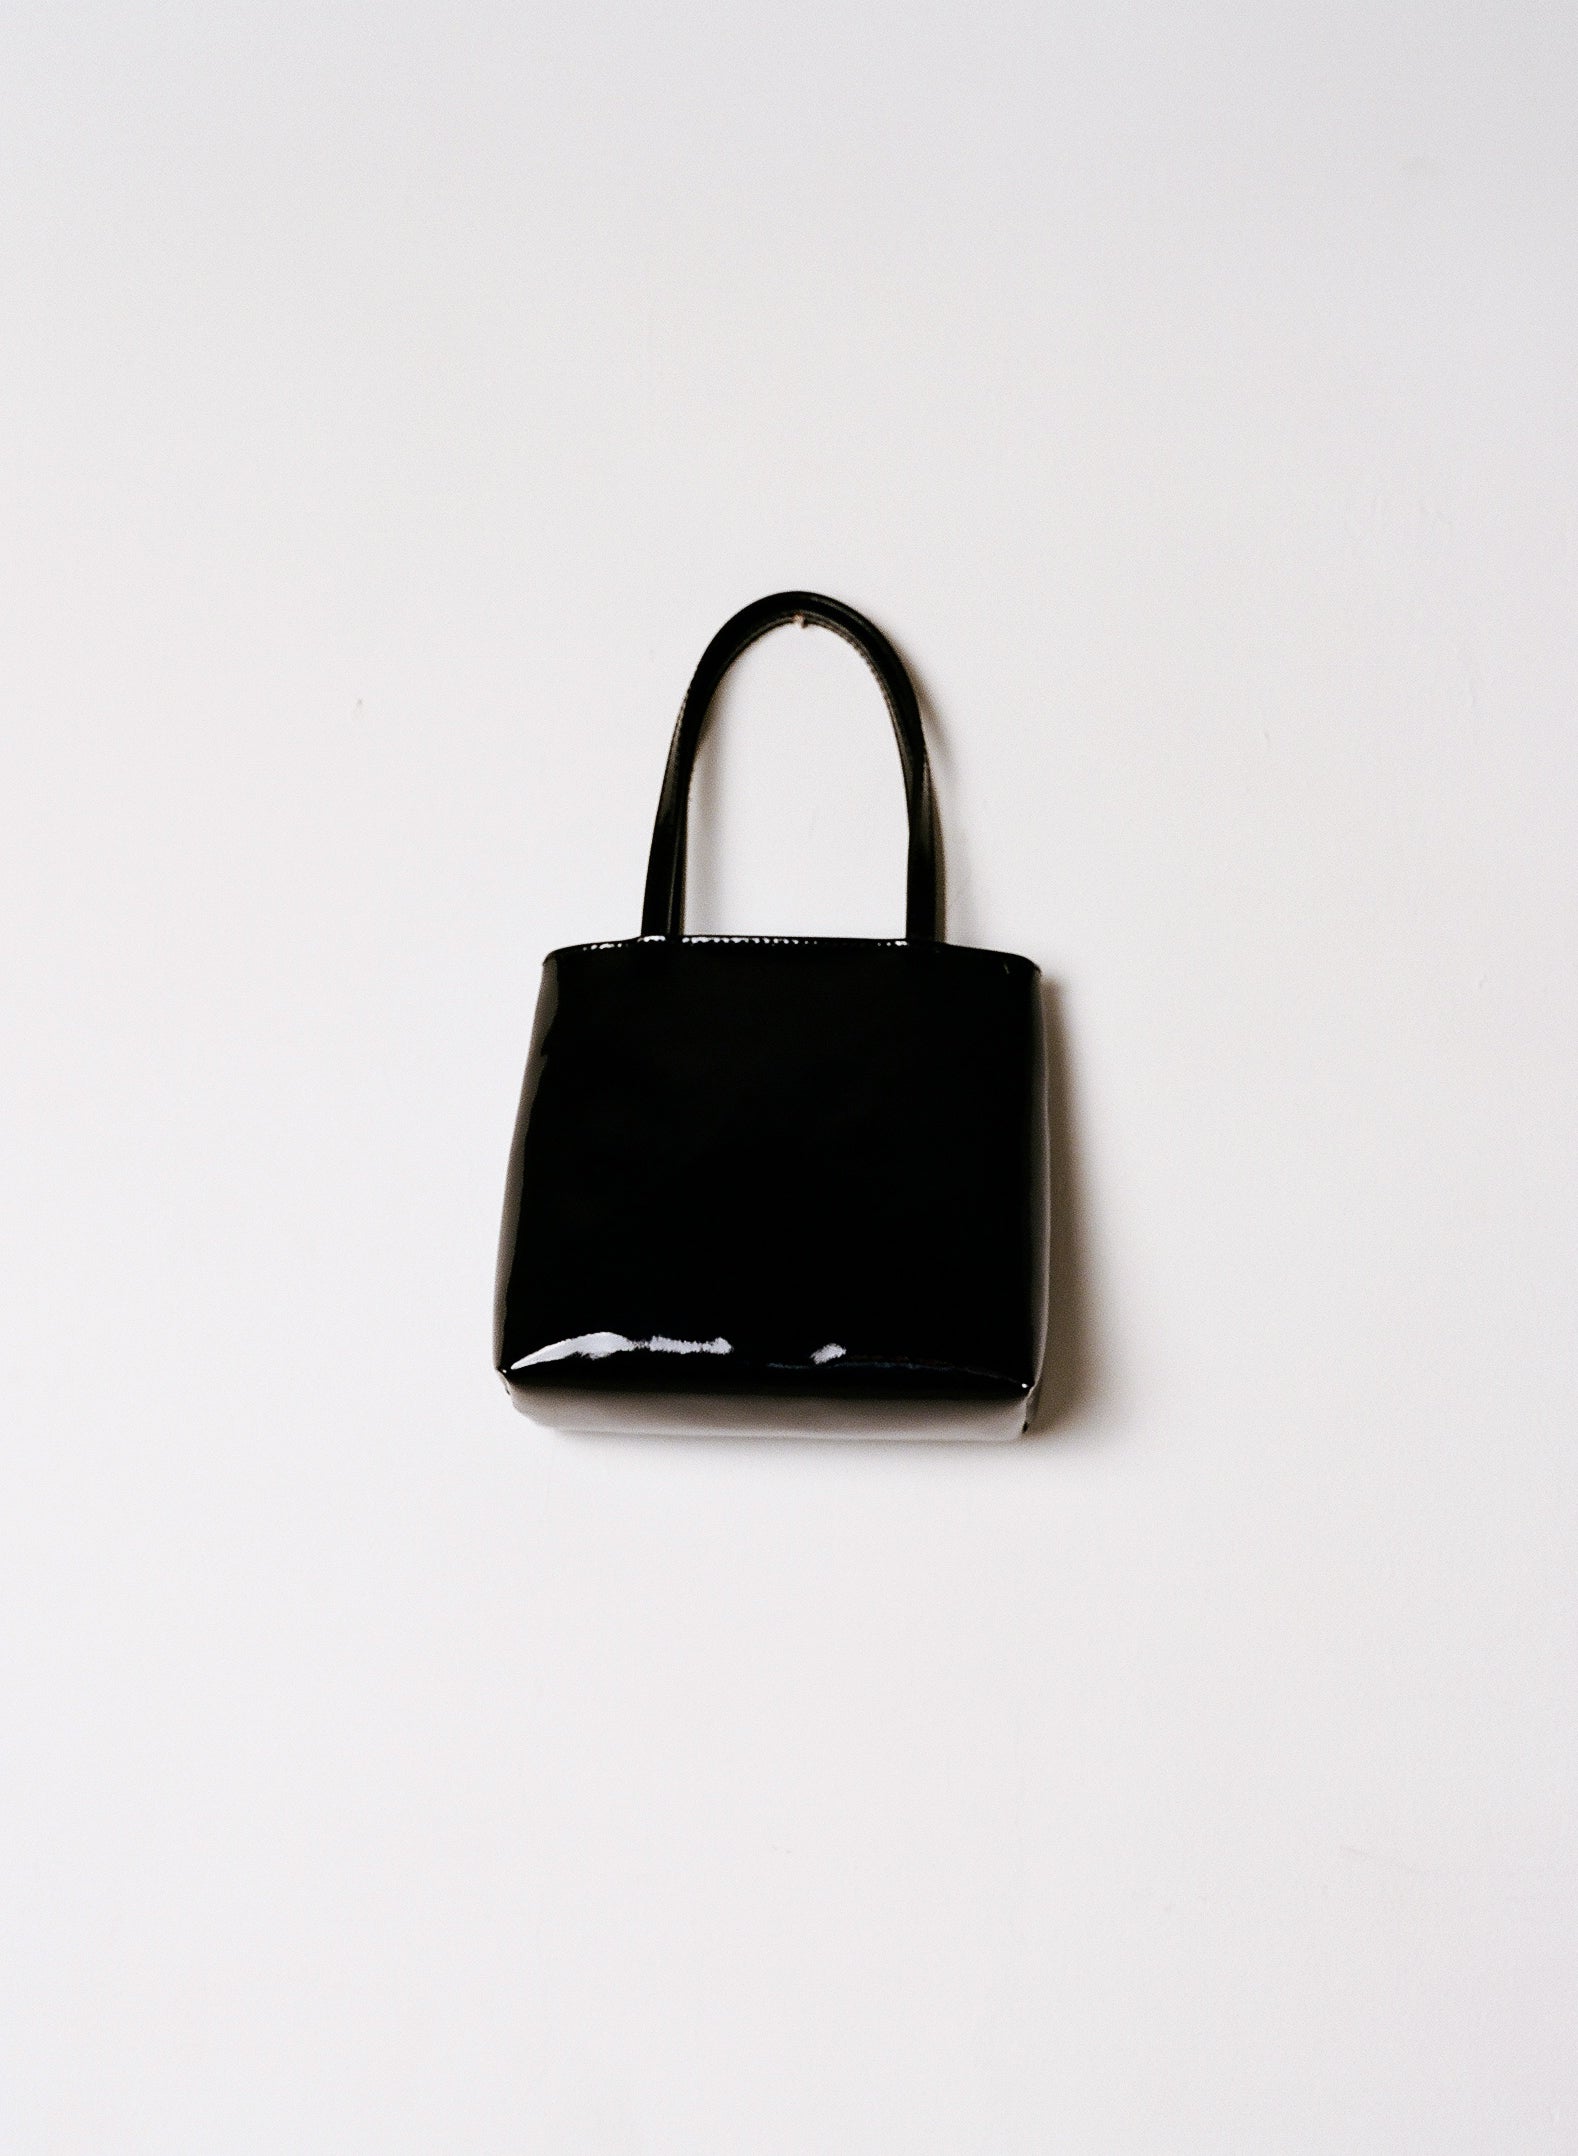 Little Leather Bag in Black